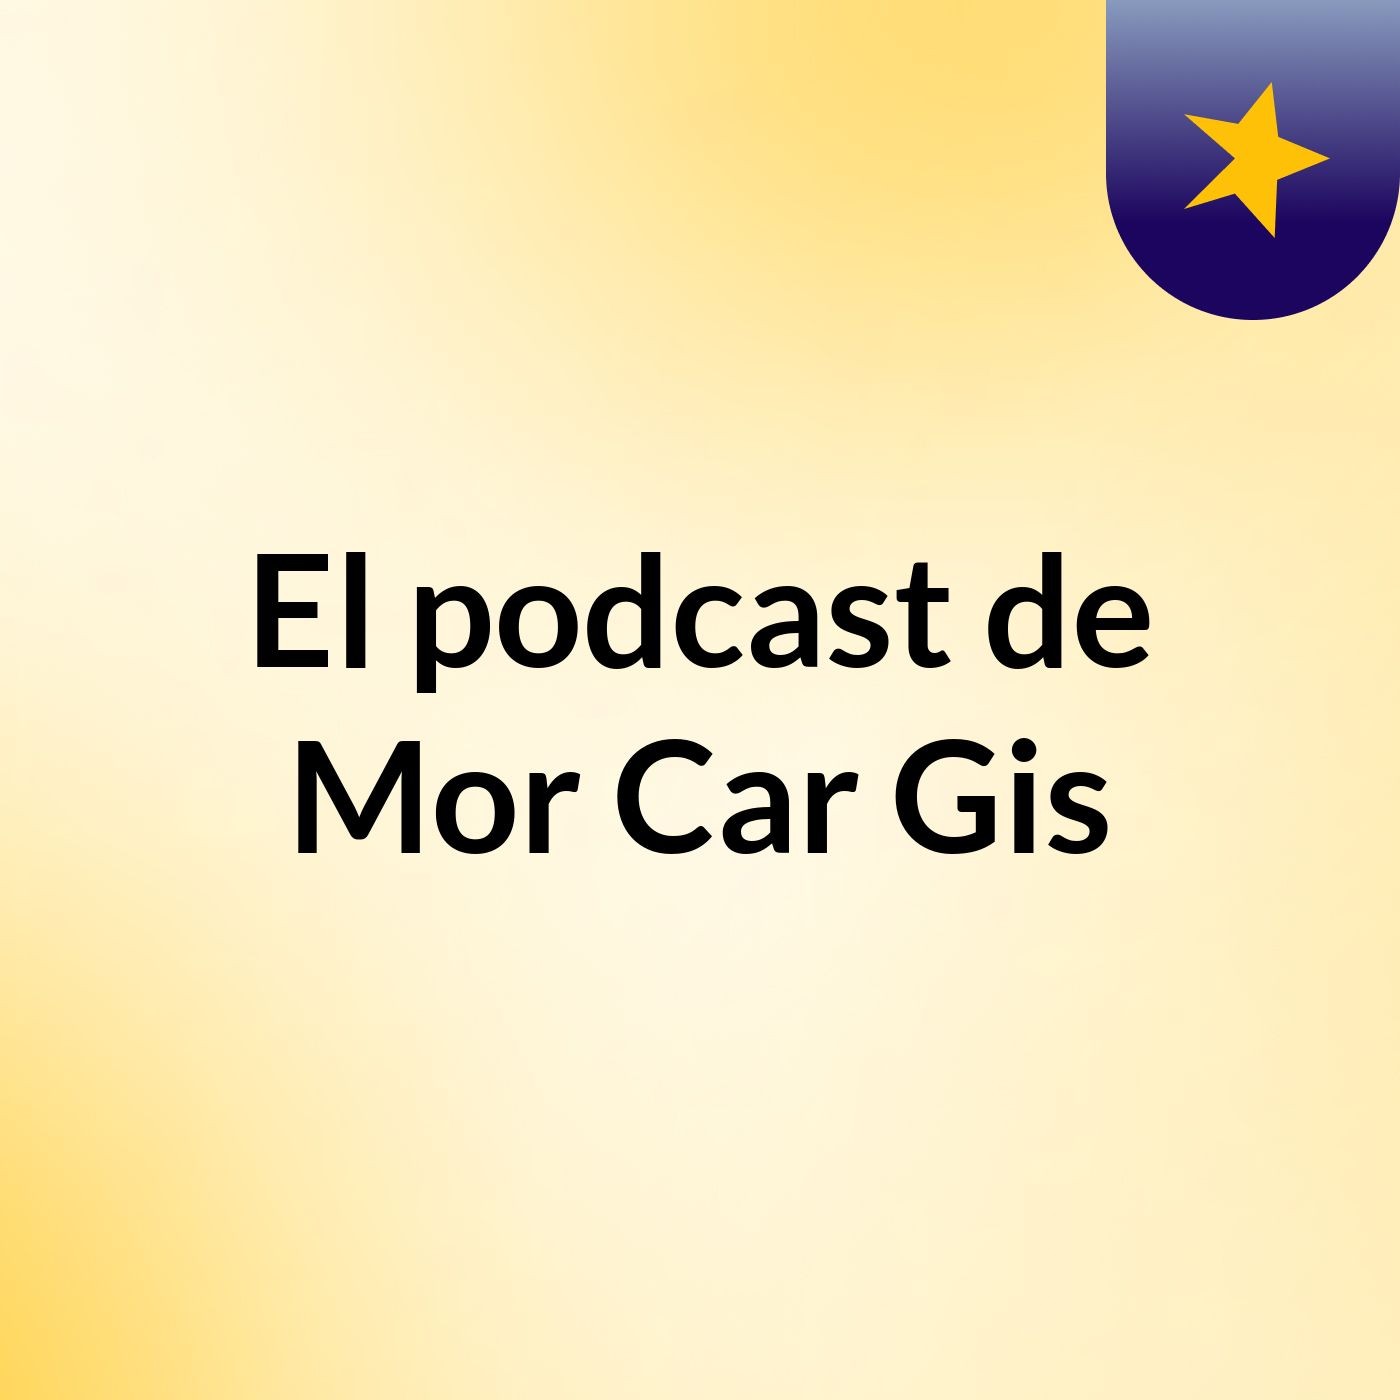 Episodio 2 - El podcast de Mor Car Gis